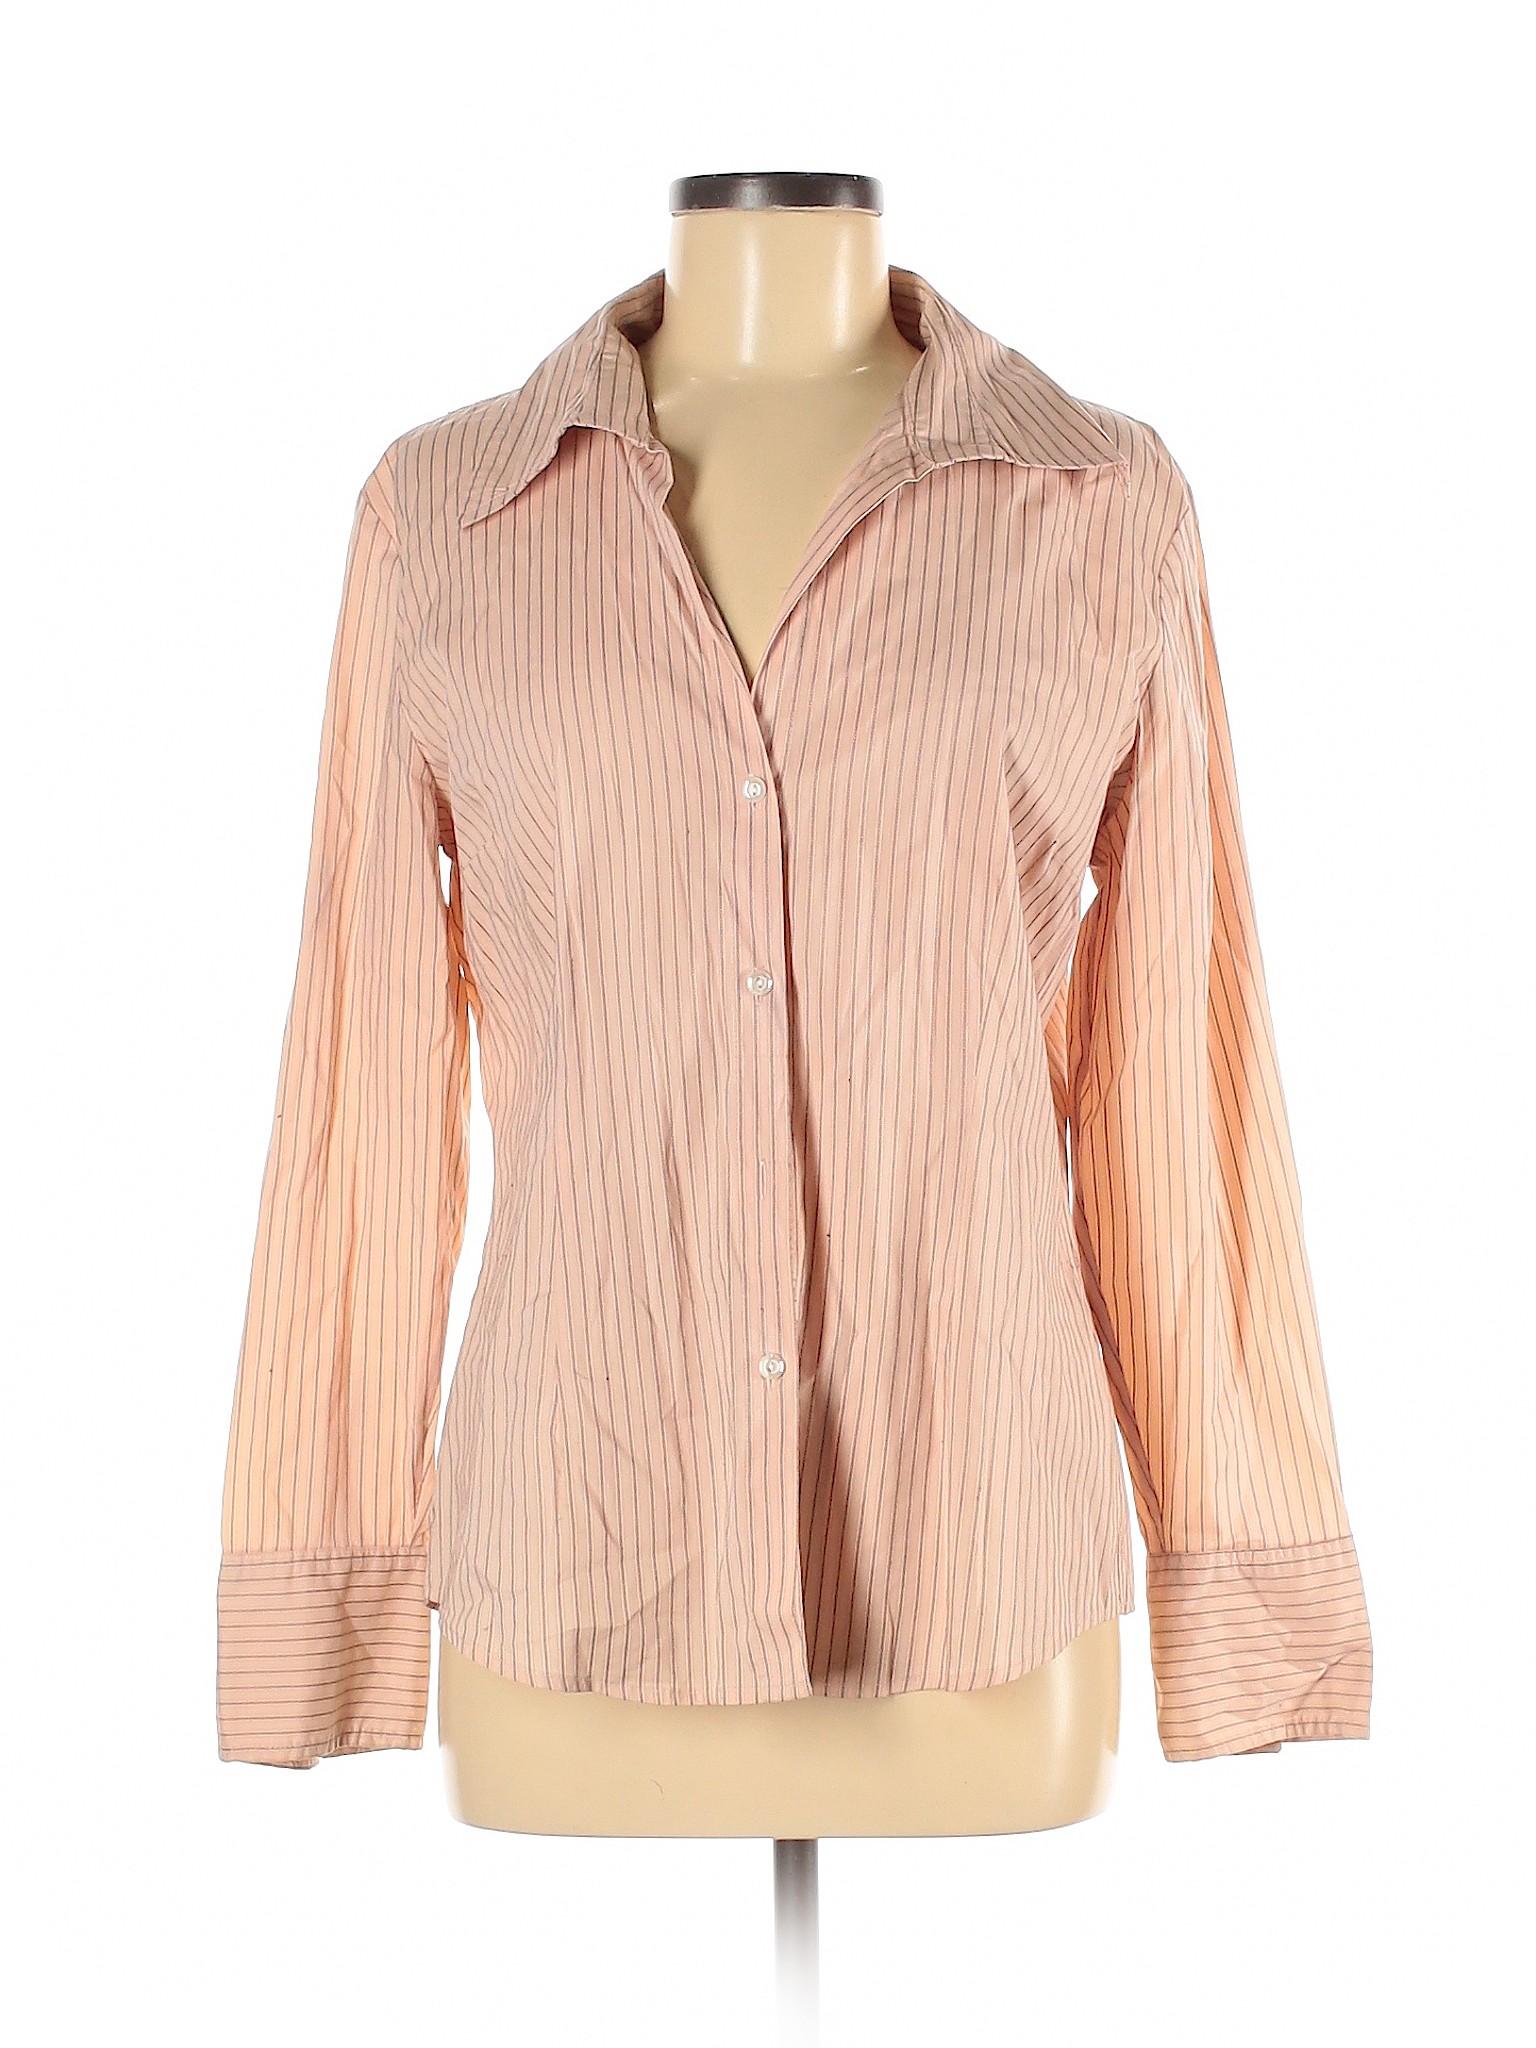 New York & Company Women Brown Long Sleeve Button-Down Shirt L | eBay